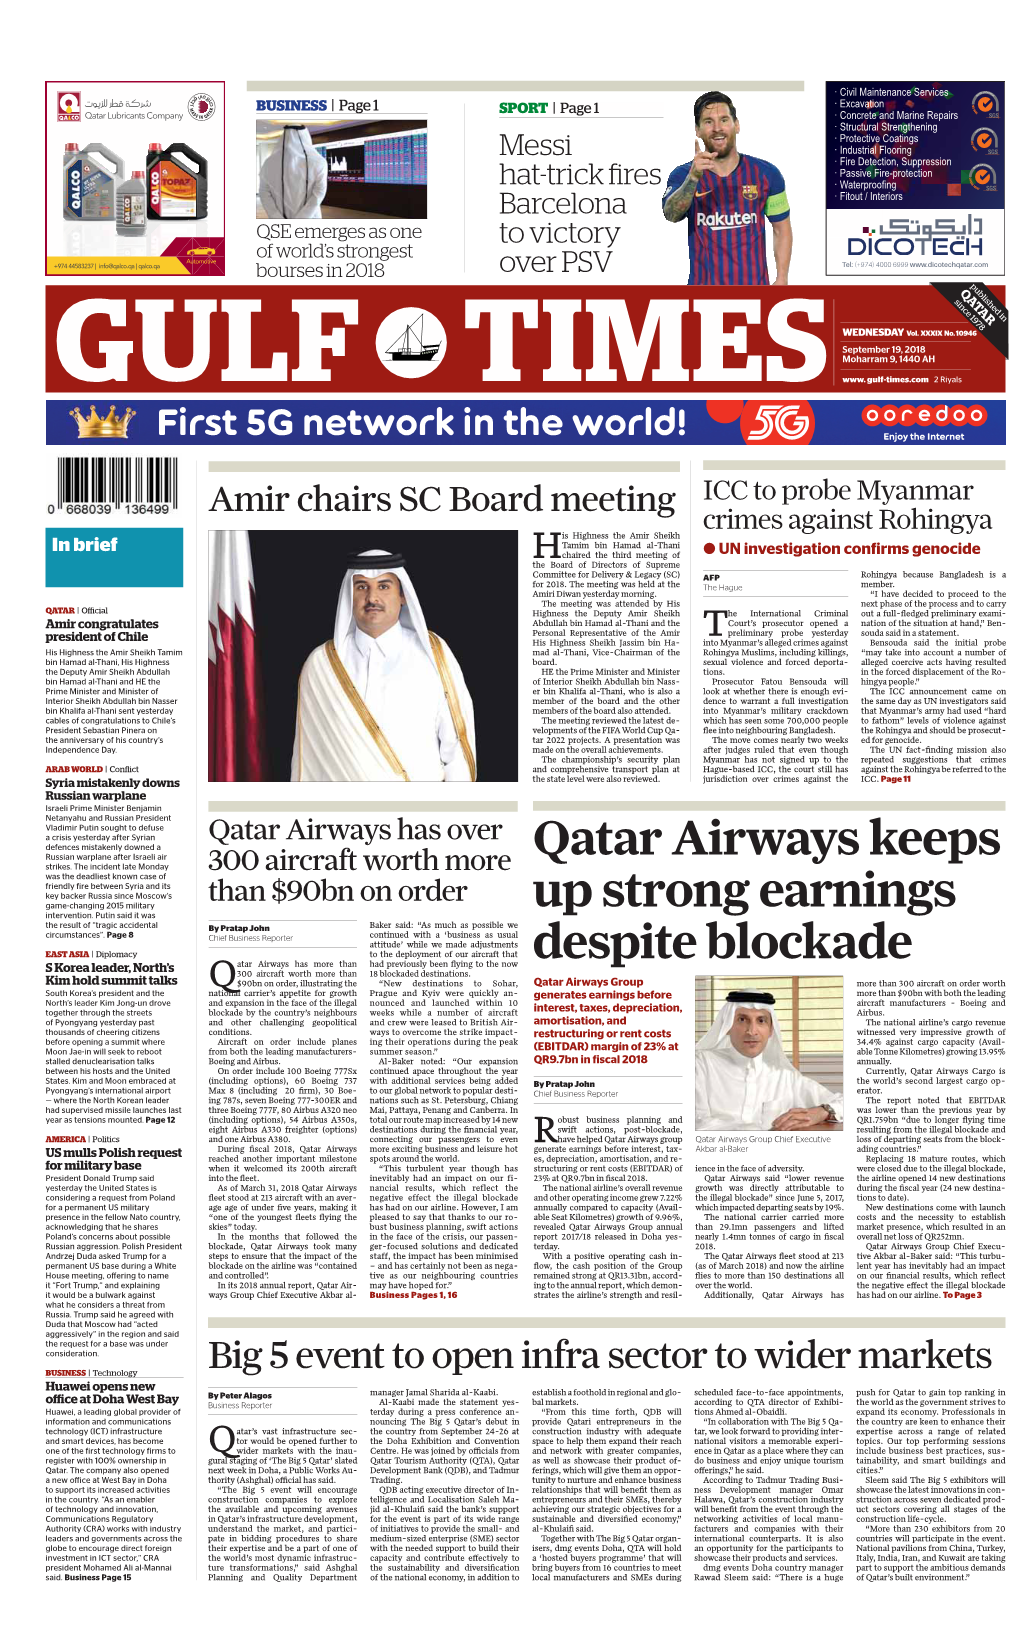 Qatar Airways Keeps up Strong Earnings Despite Blockade